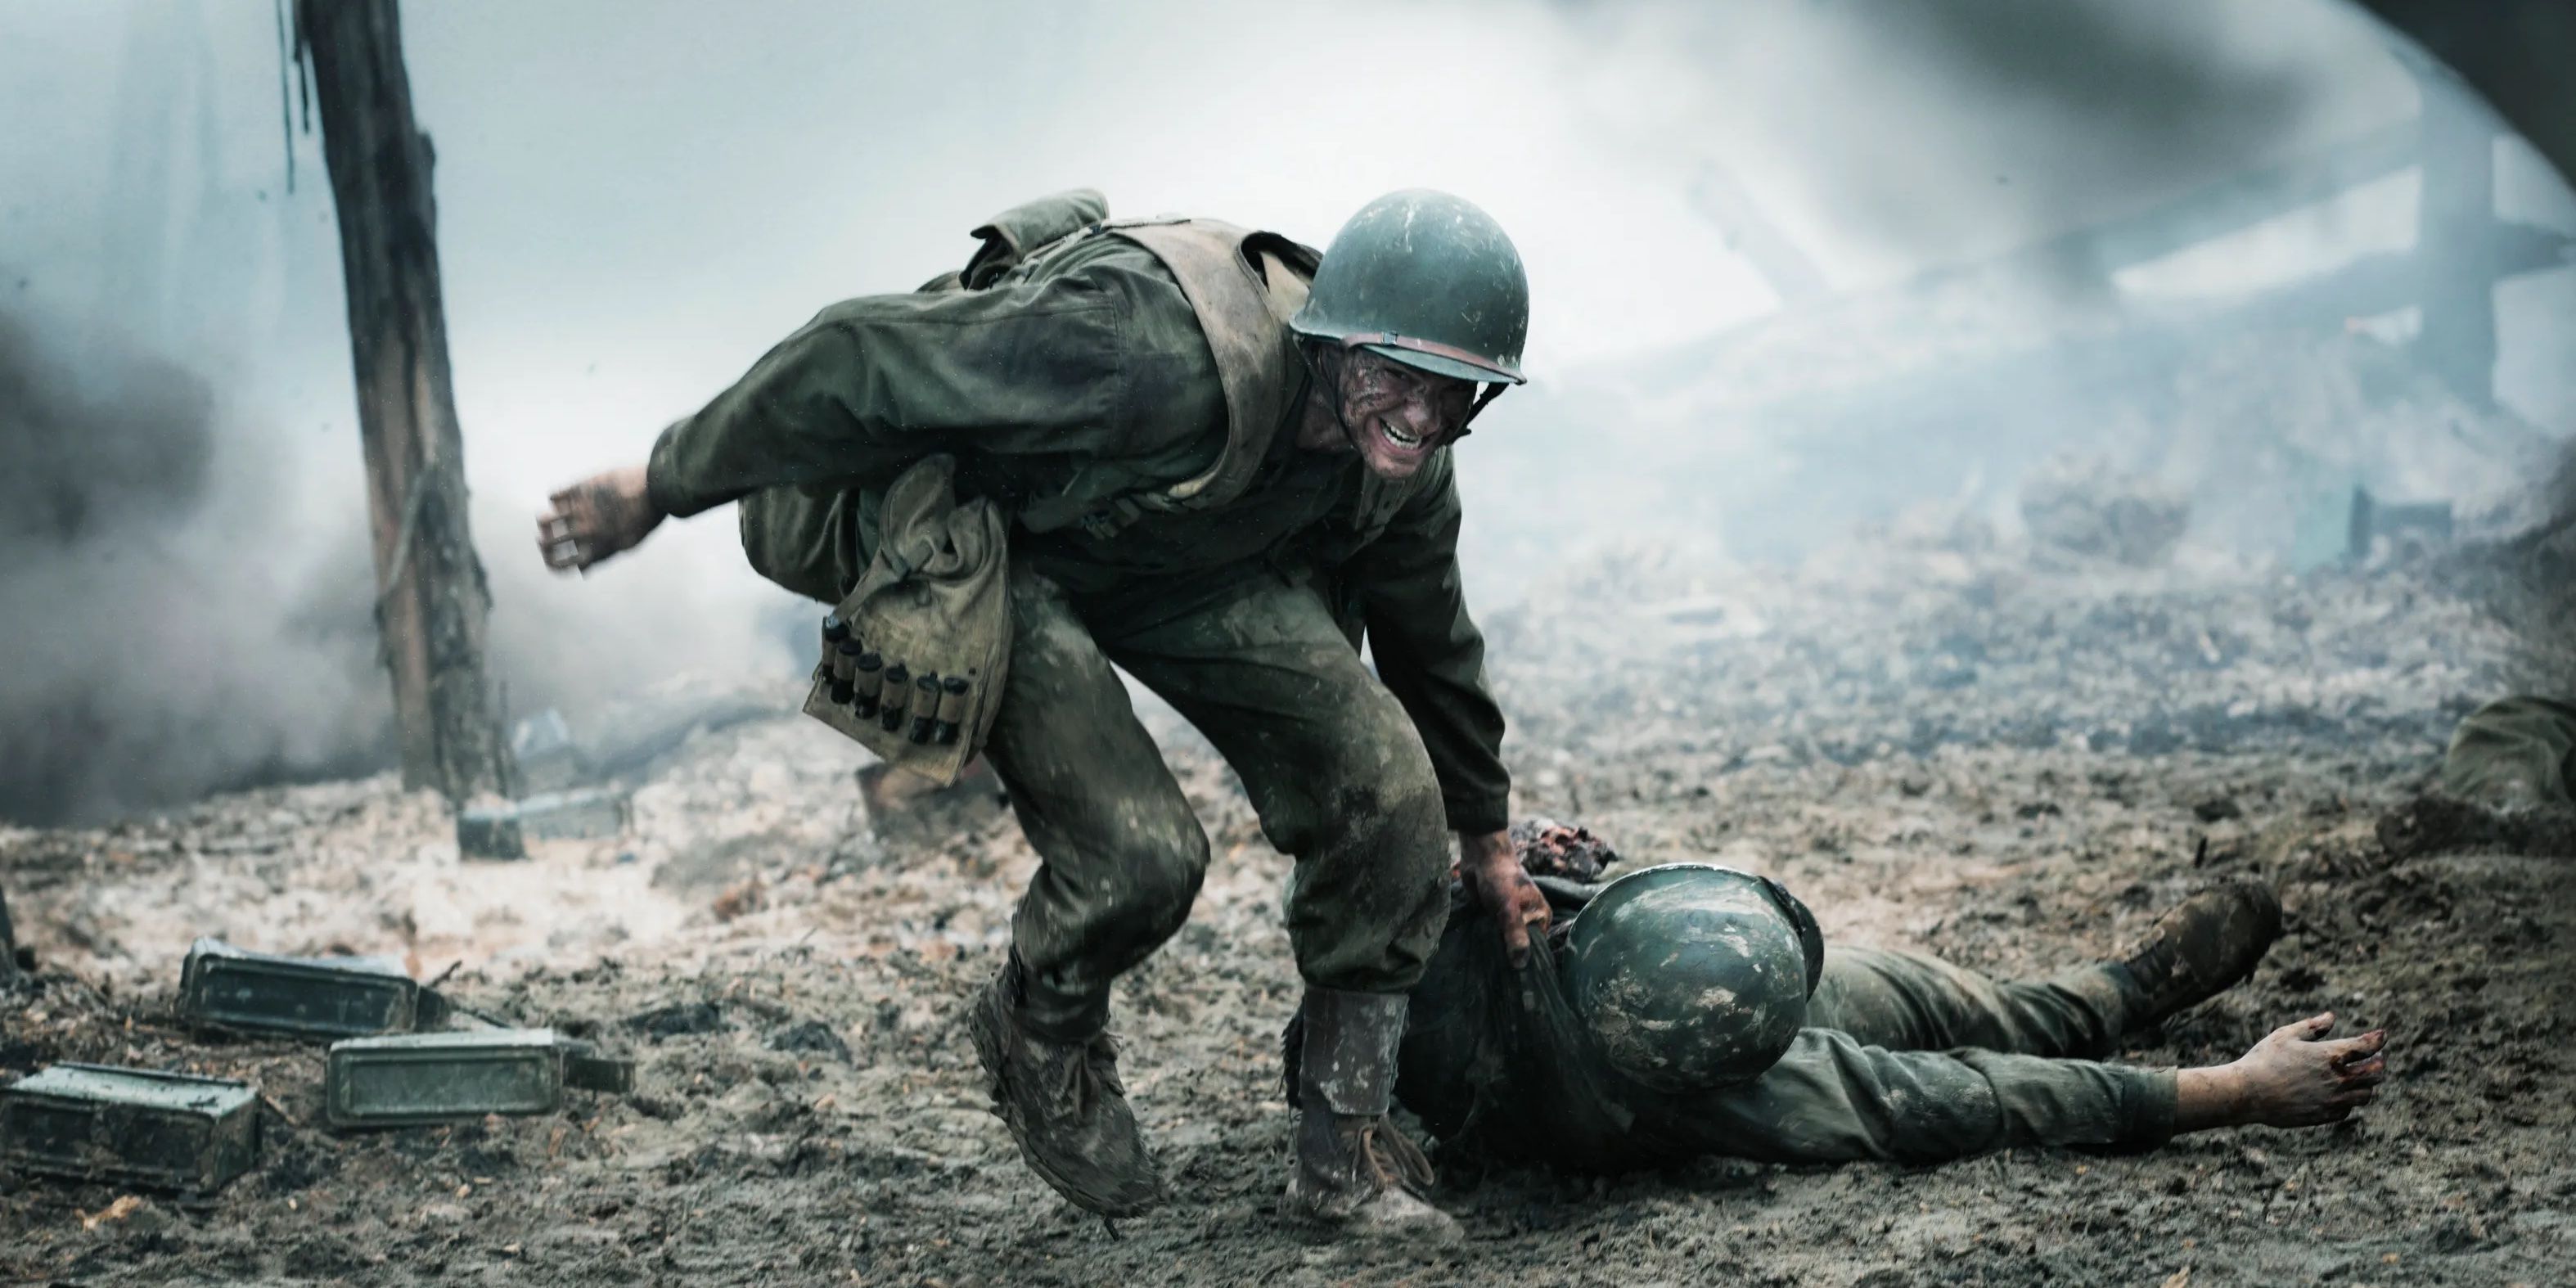 Andrew Garfield rescues fallen soldier from battlefield